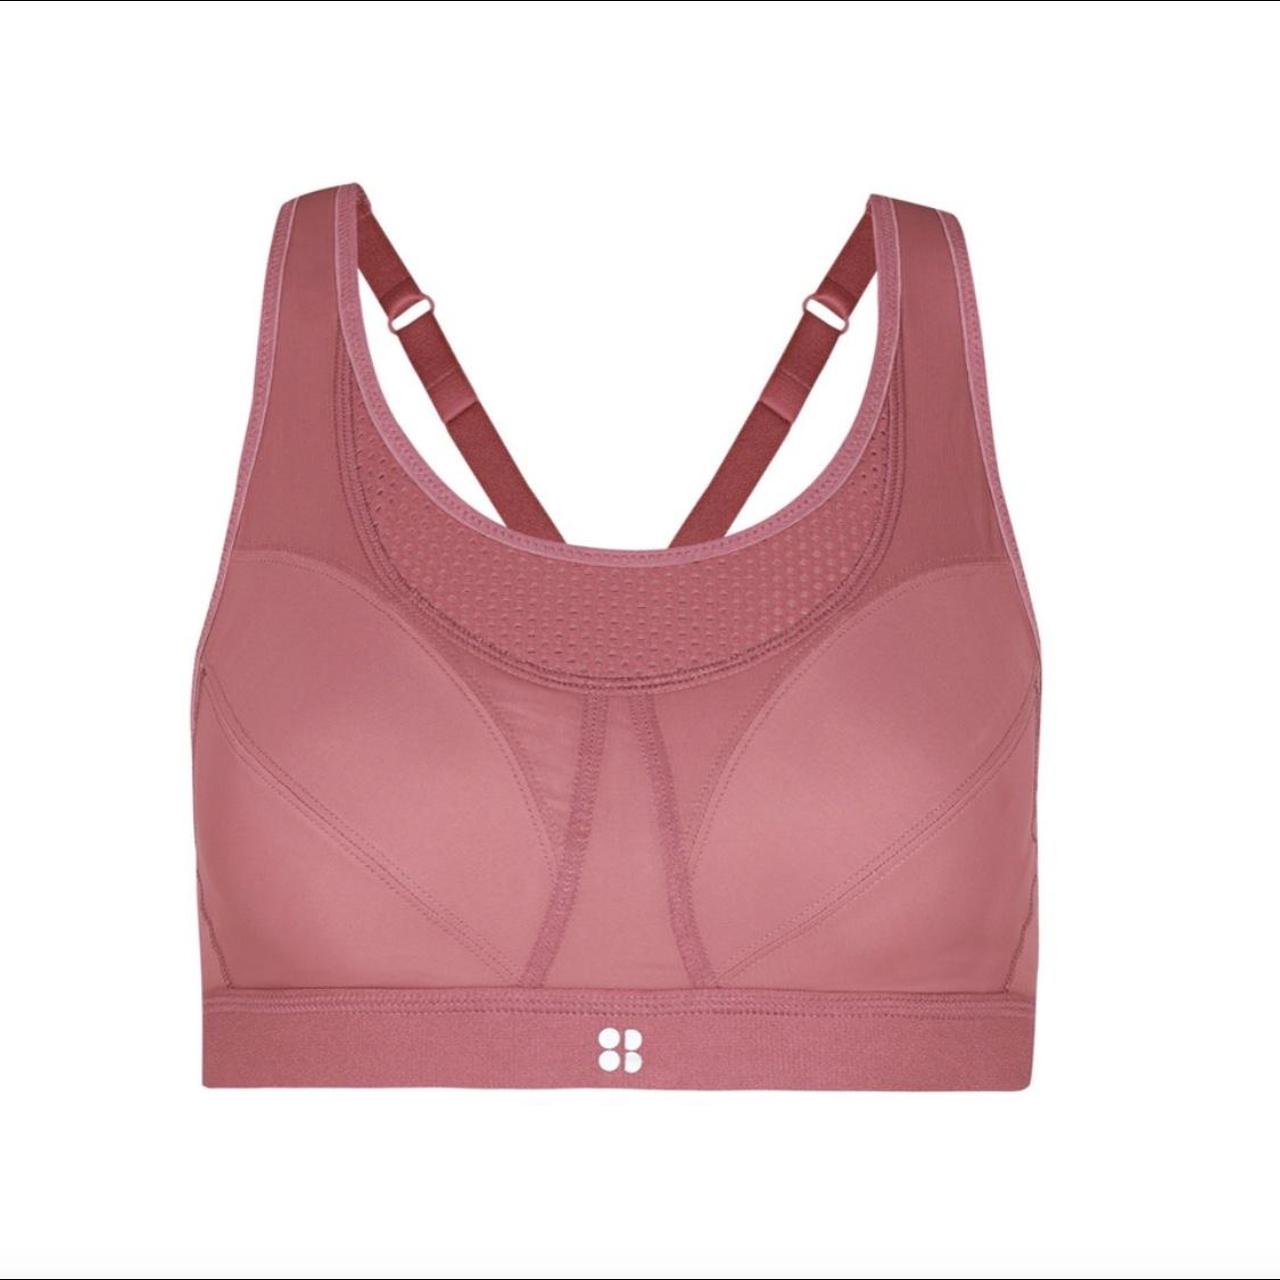 Sweaty Betty Brand New Ultra Run Sports Bra in Pink - Depop